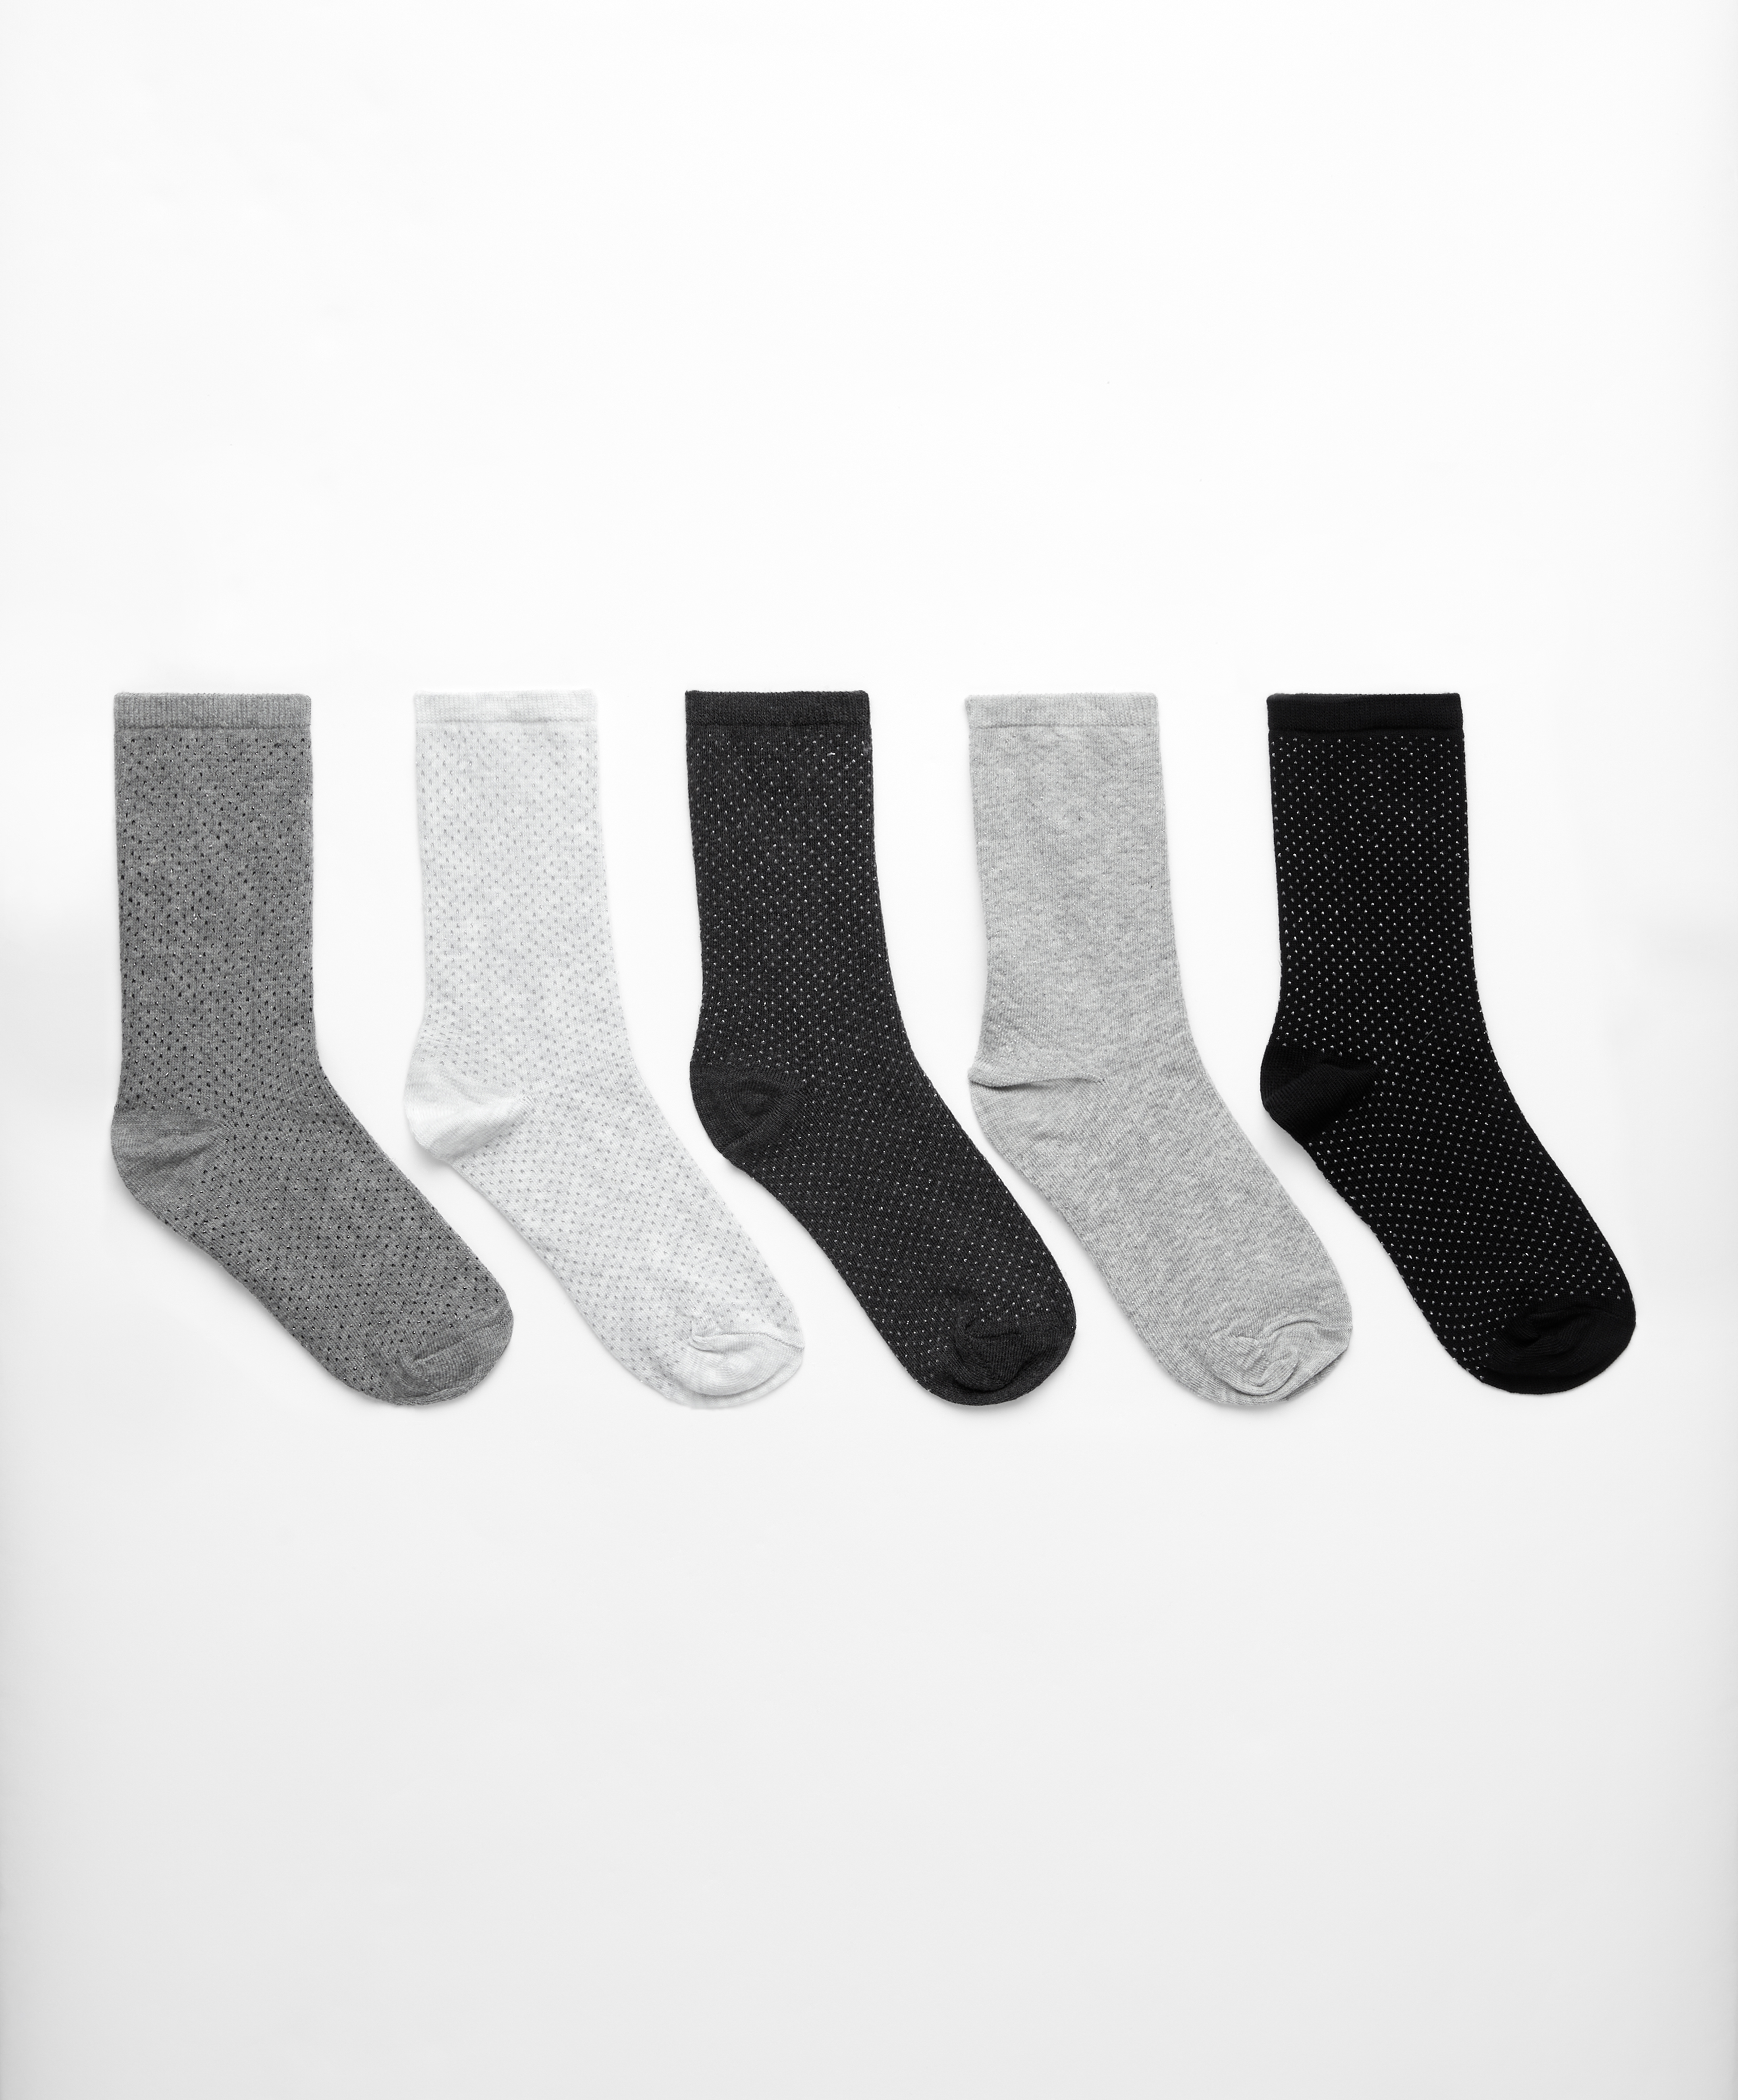 5 pairs of cotton fantasy classic socks